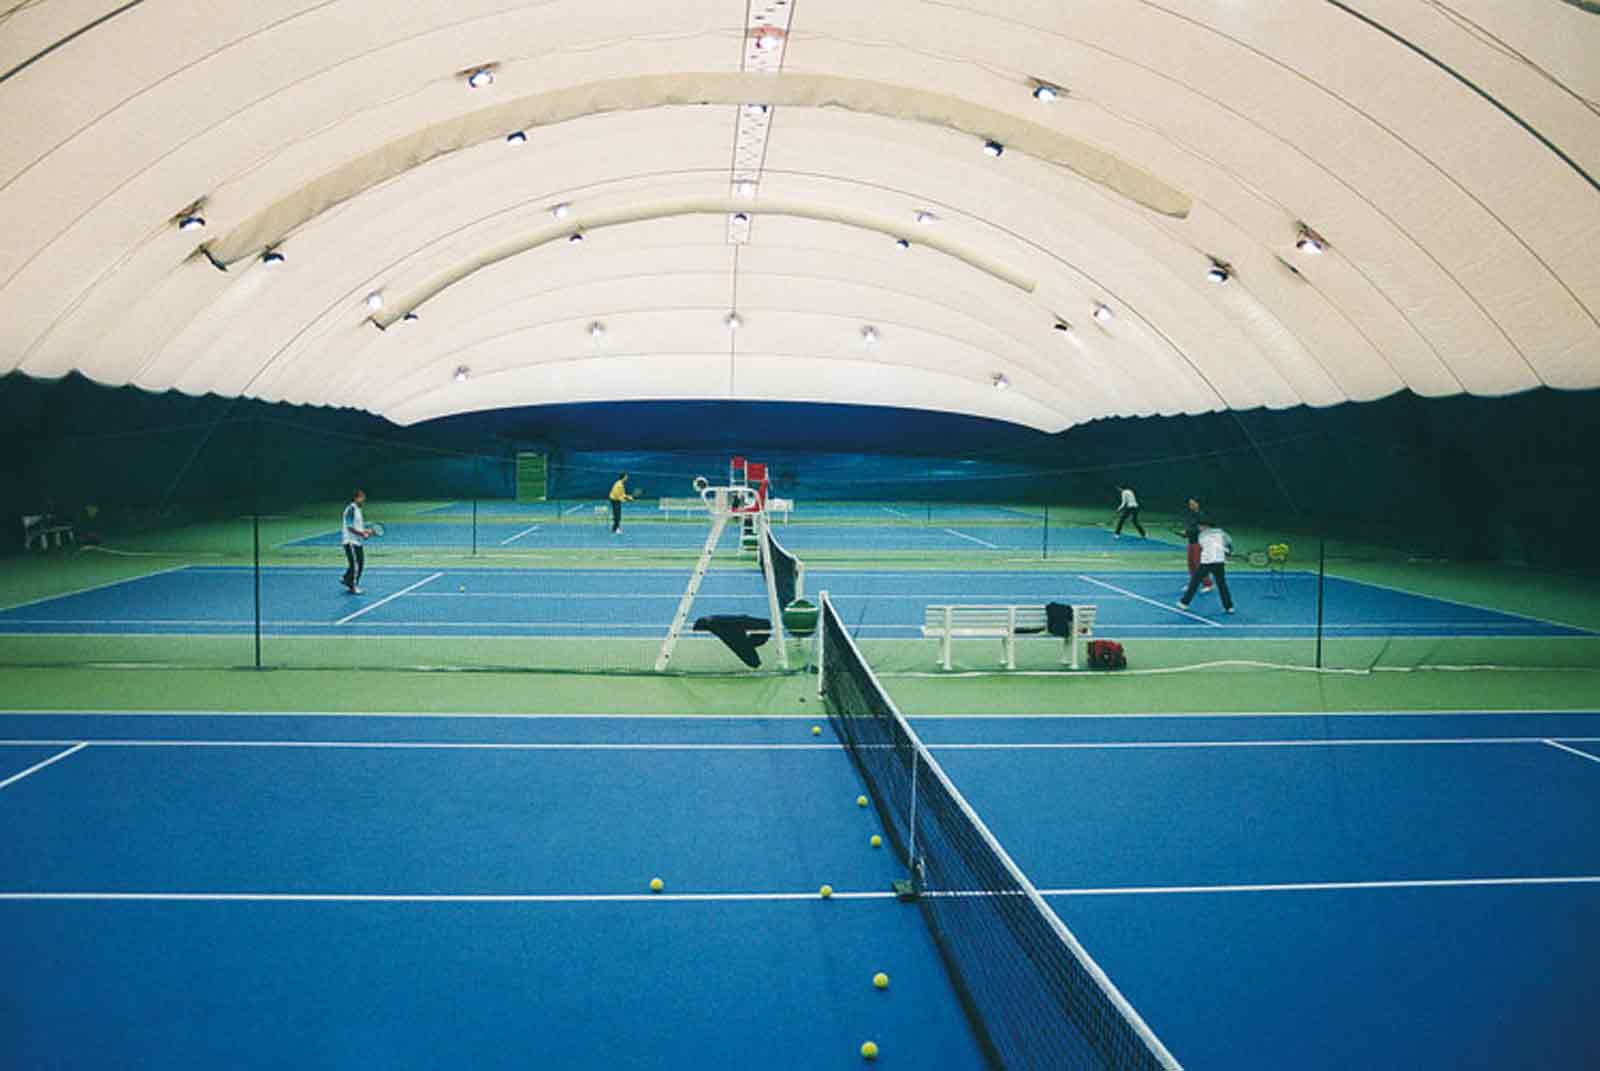 https://www.klimagiel.it/wp-content/uploads/2022/01/tennis-deflated-inflated.jpg